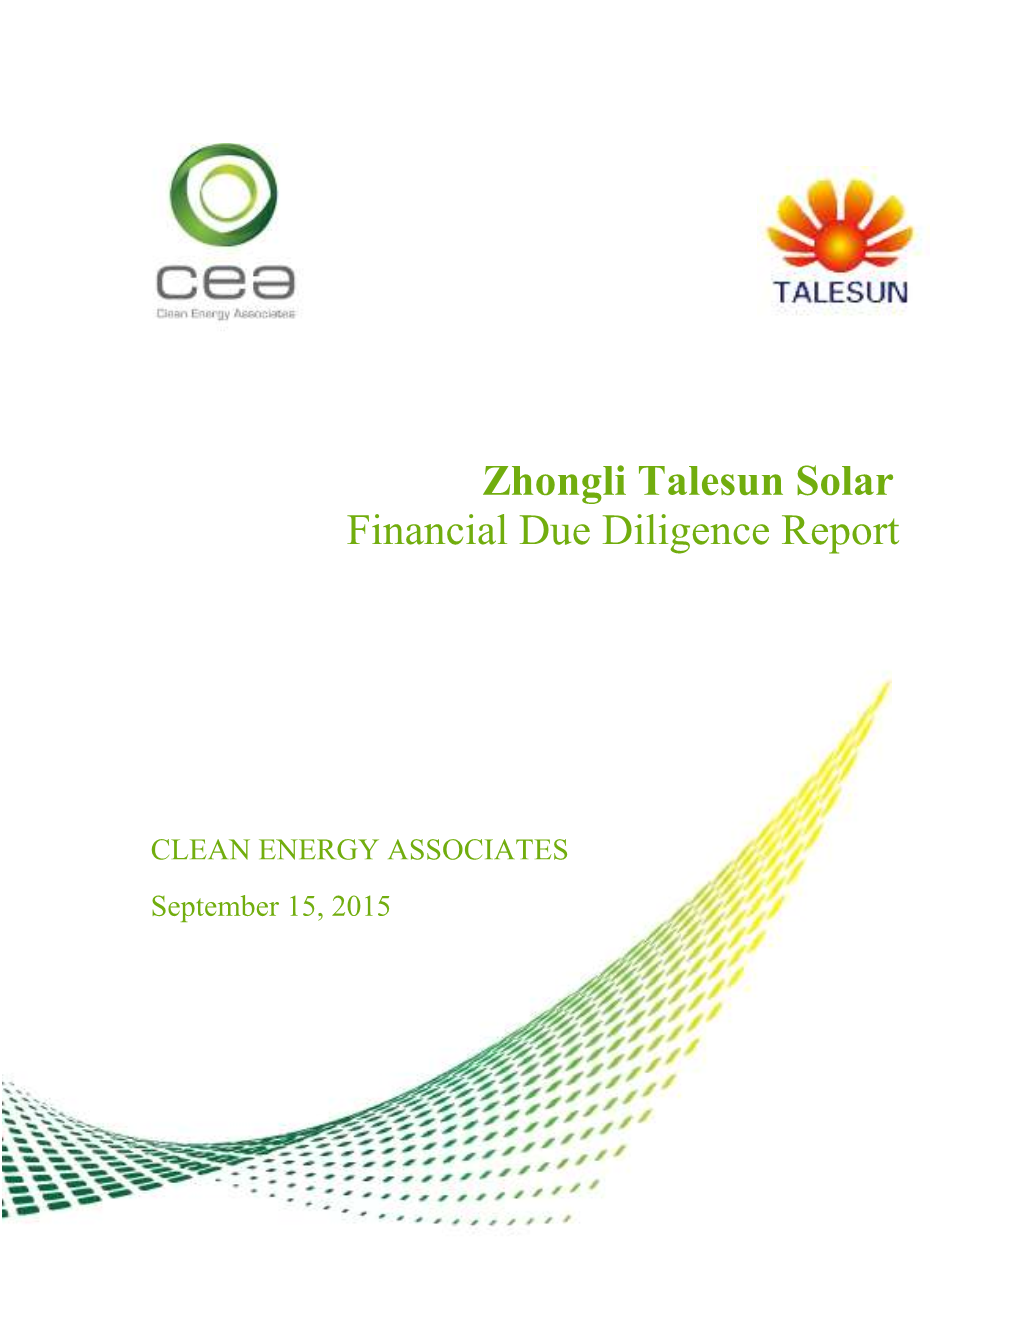 Zhongli Talesun Solar Financial Due Diligence Report